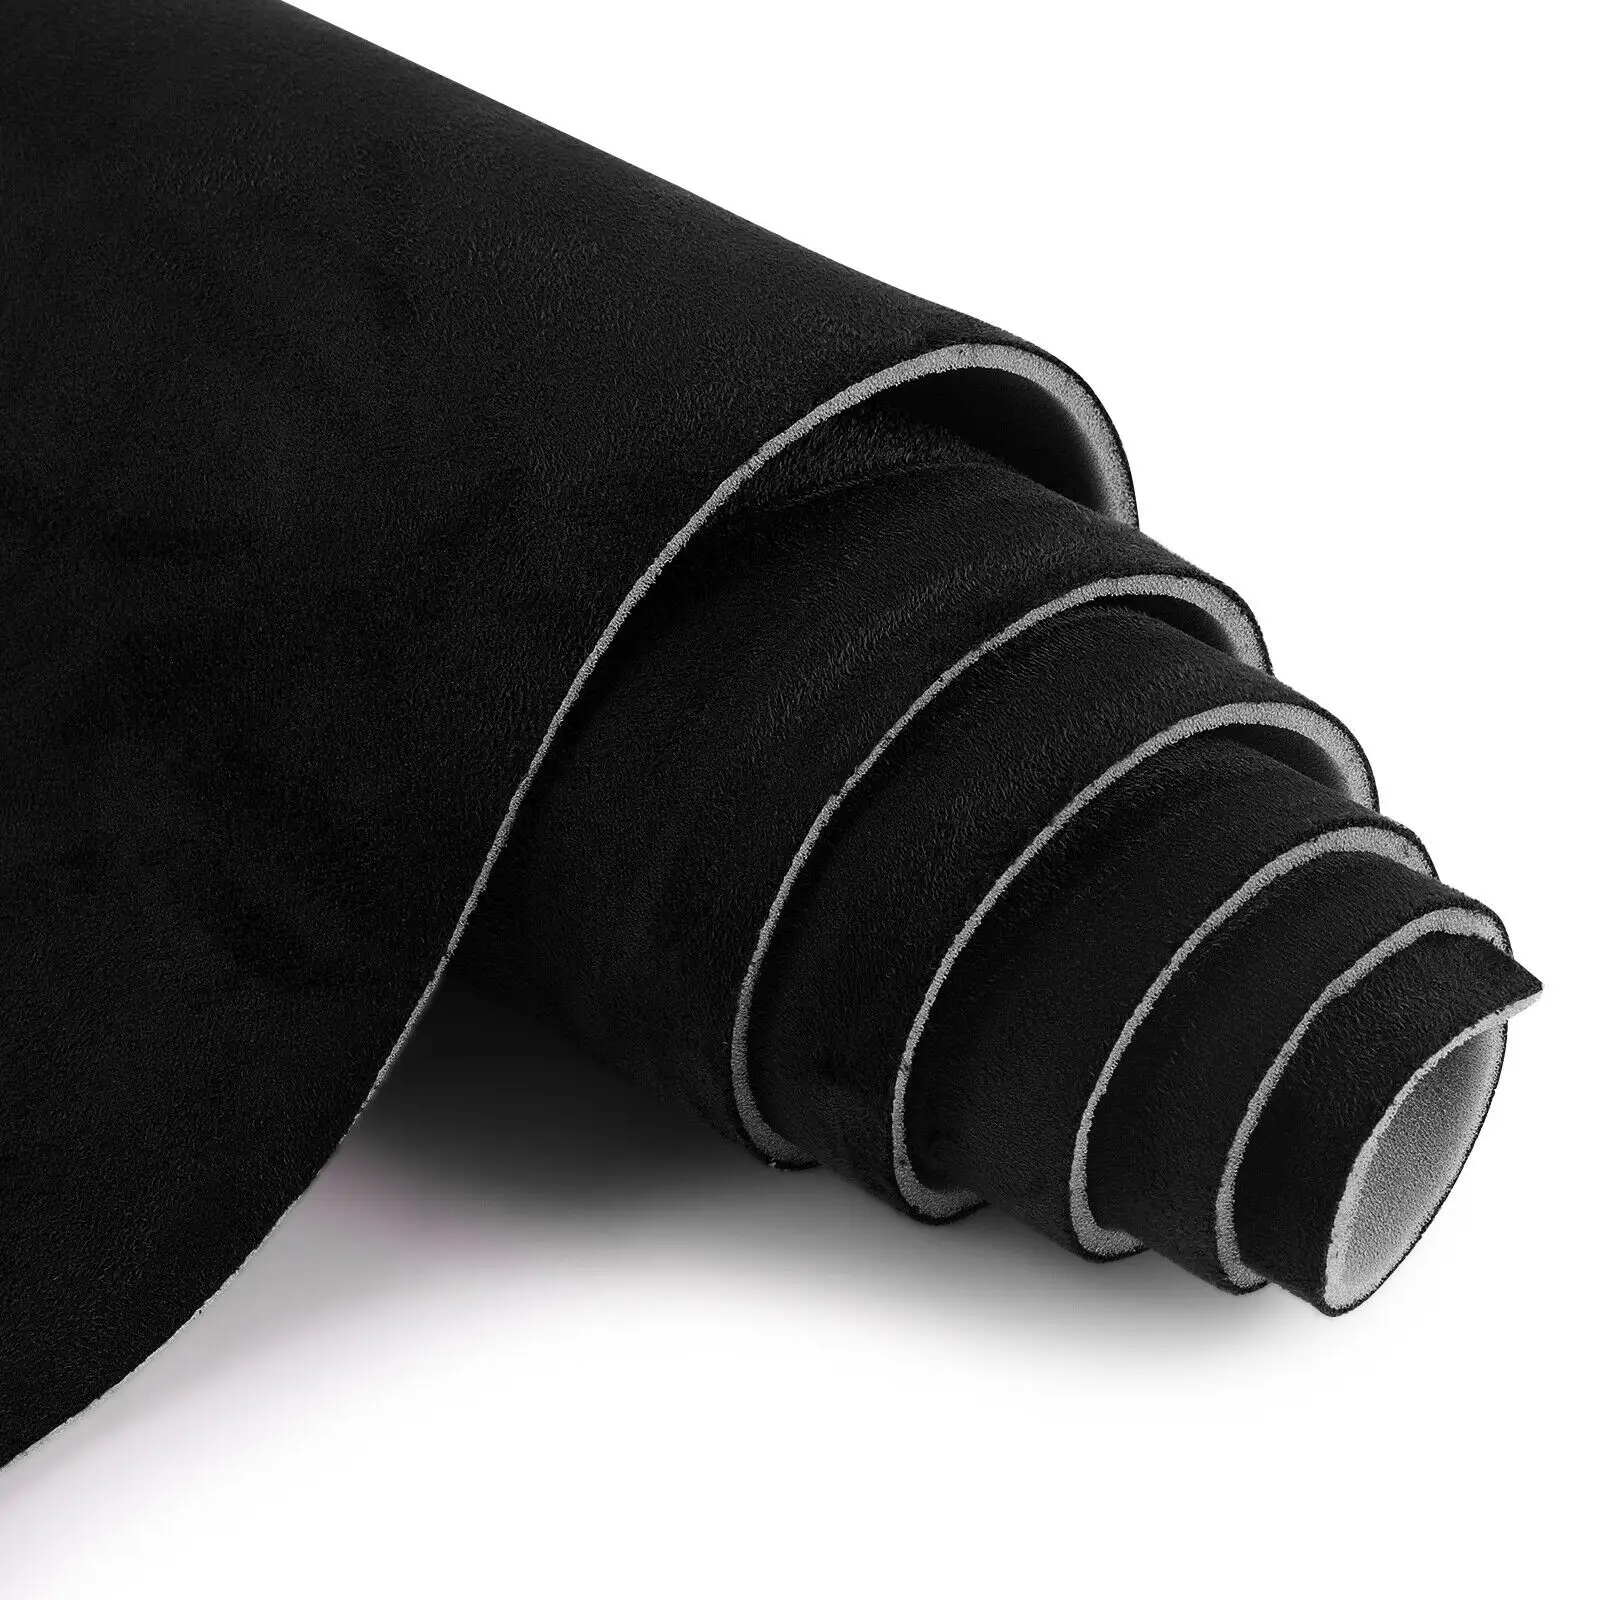 Tela de ante elástica para tapicería Interior de coche, accesorio para tapicería, color negro